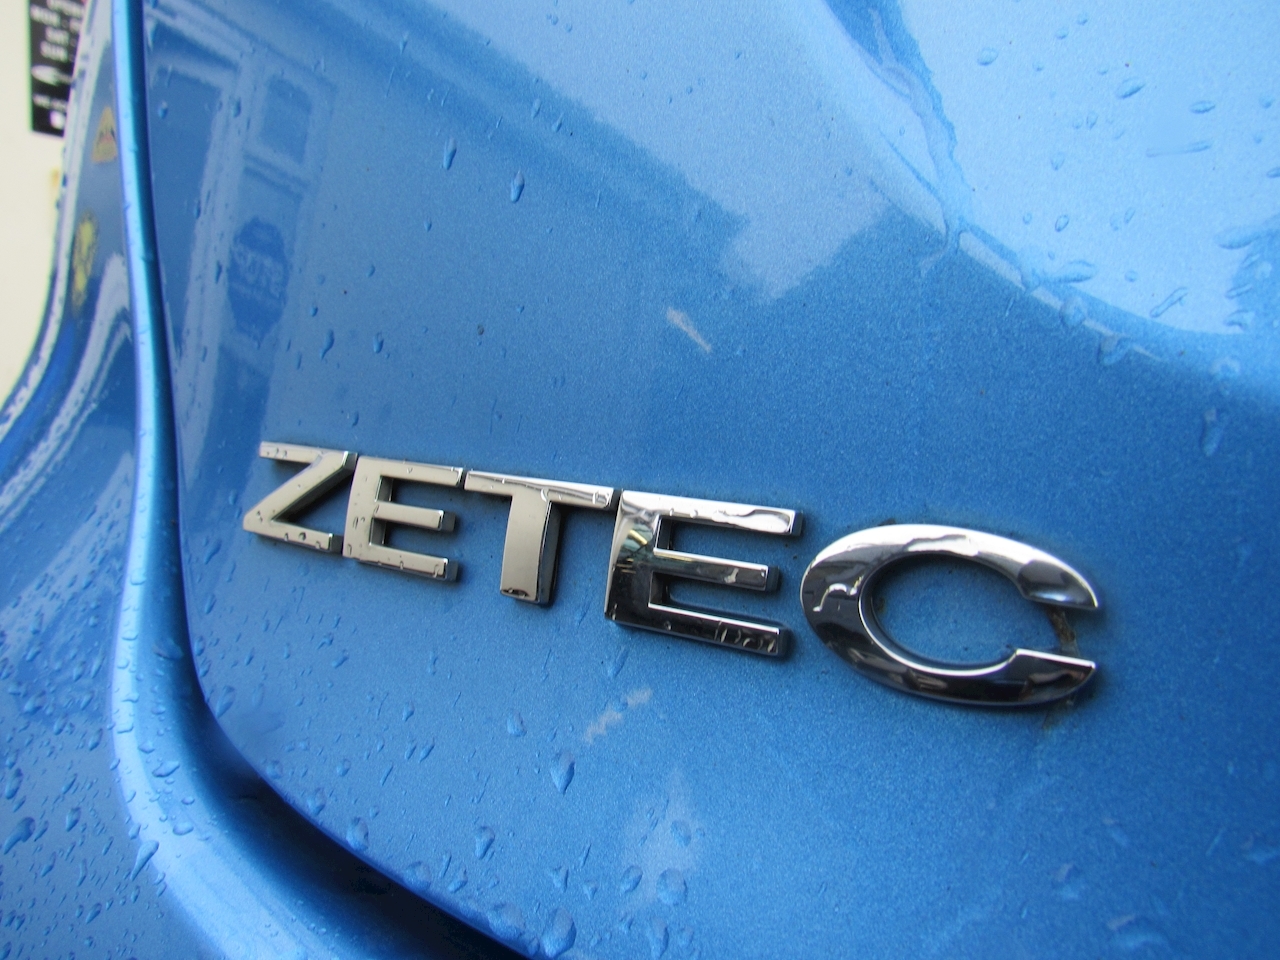 Fiesta Zetec Hatchback 1.3 Manual Petrol